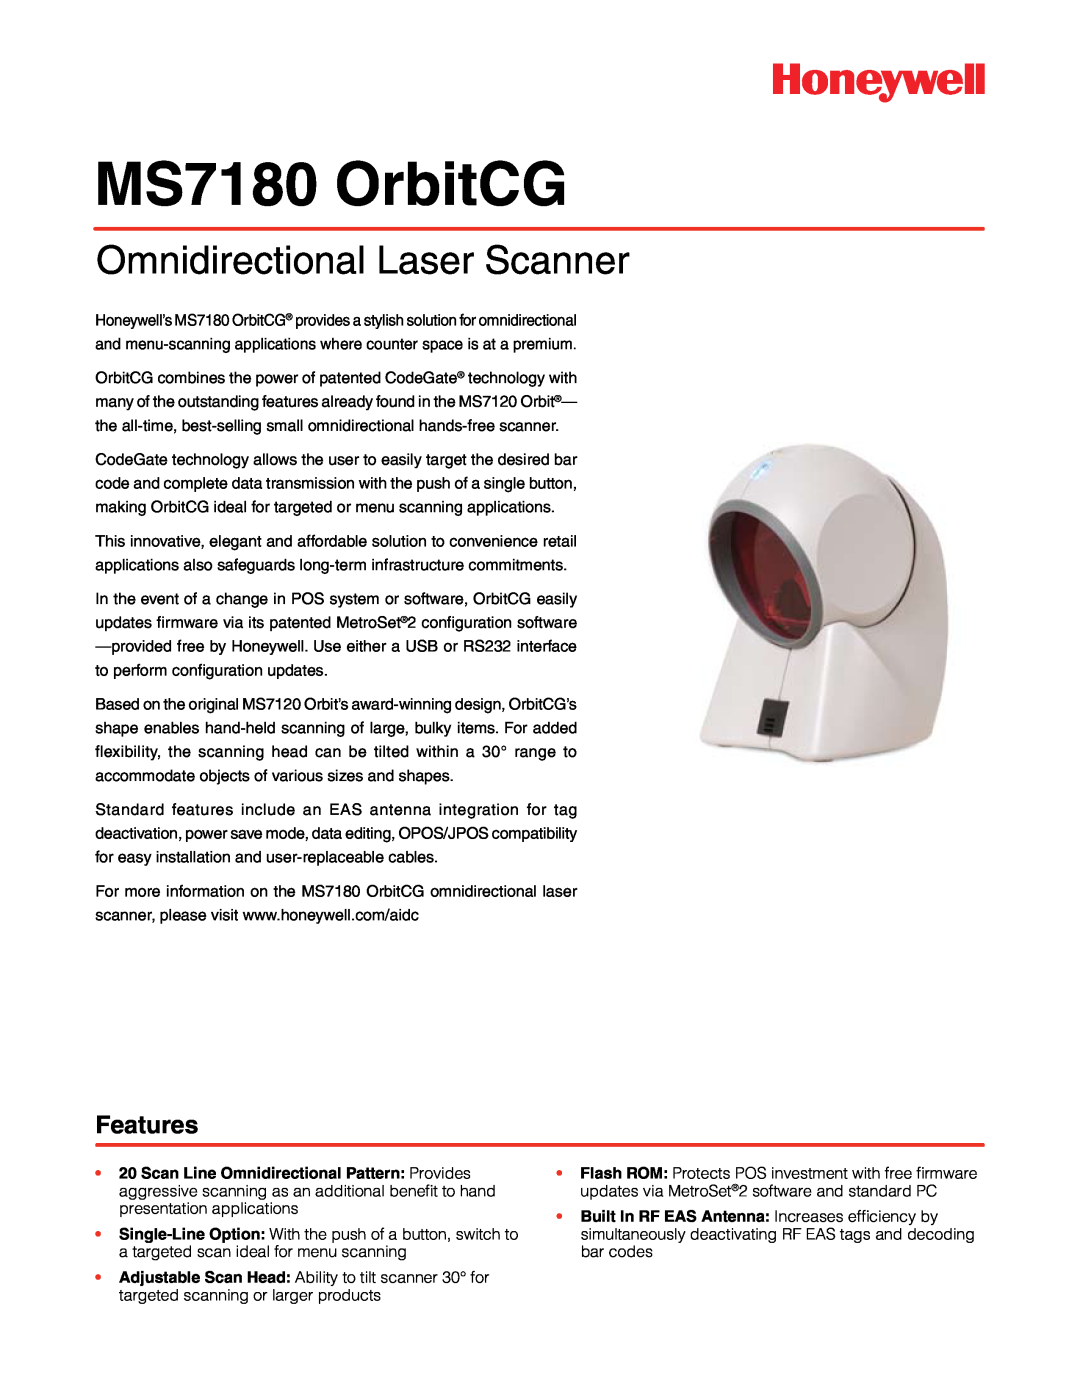 Honeywell manual MS7180 OrbitCG, Omnidirectional Laser Scanner, Features 